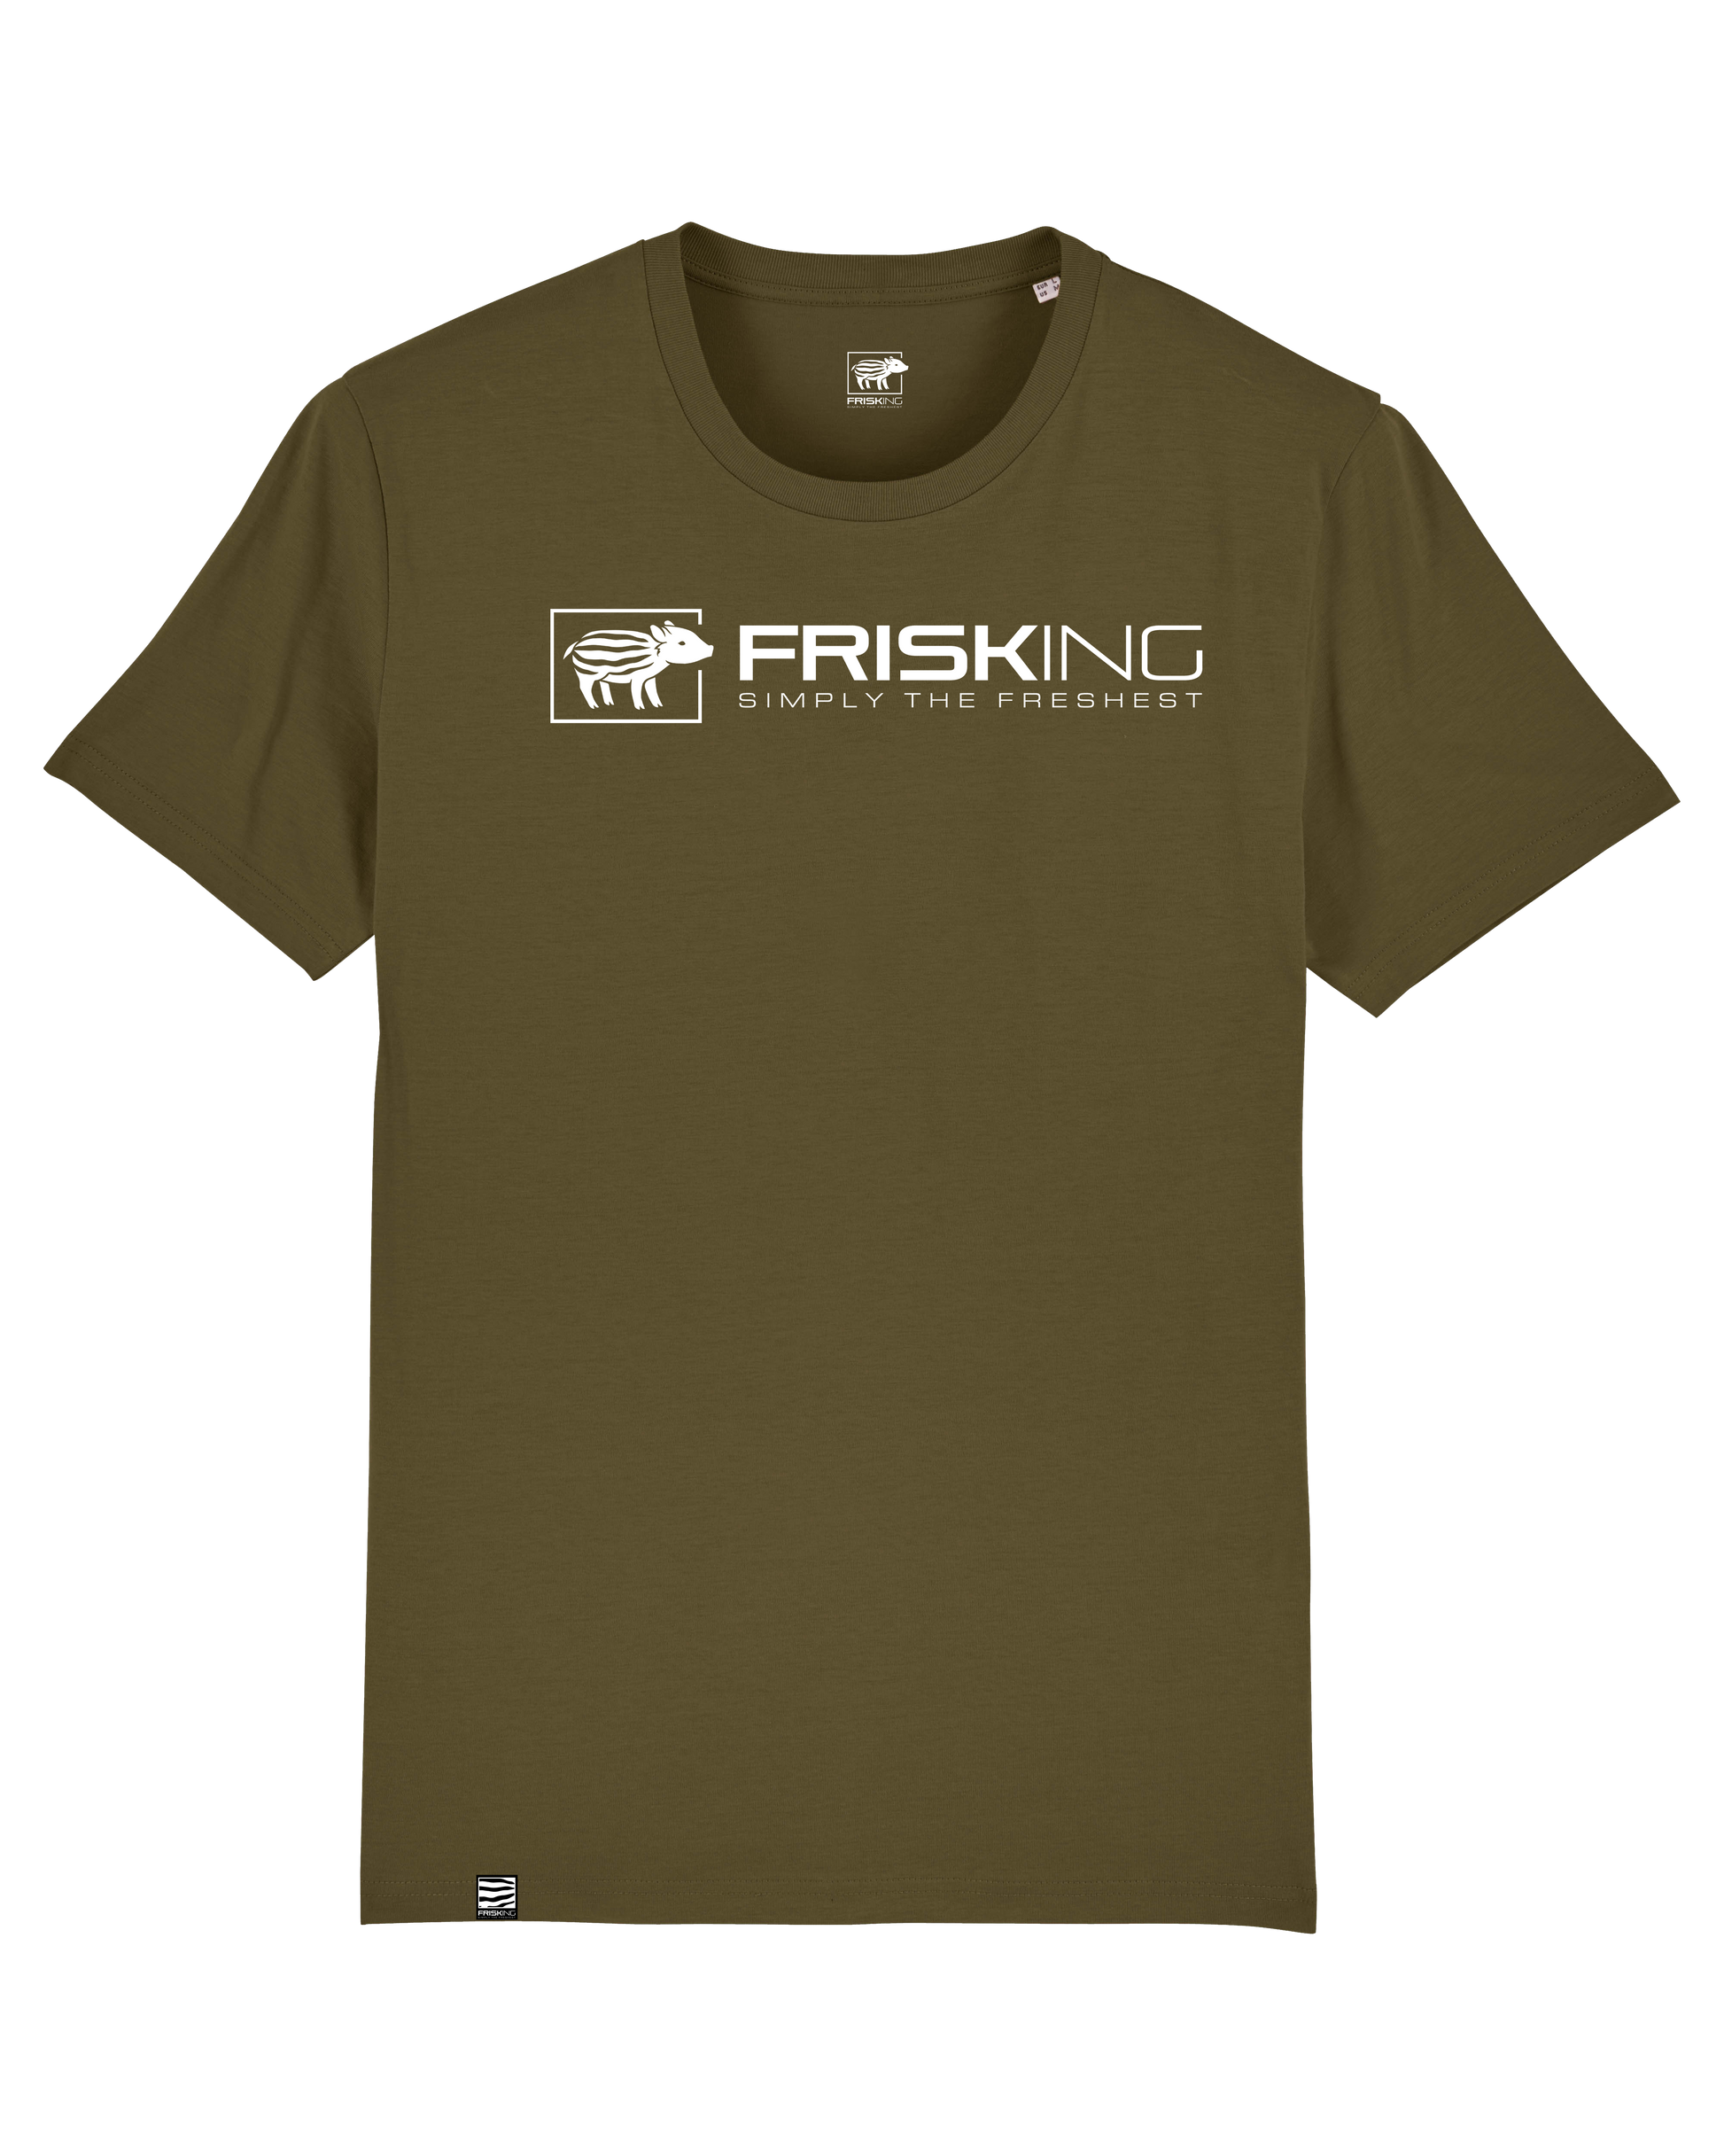 FRISKING Men T-Shirt "classic", Shirt, T Shirt, simply the freshest